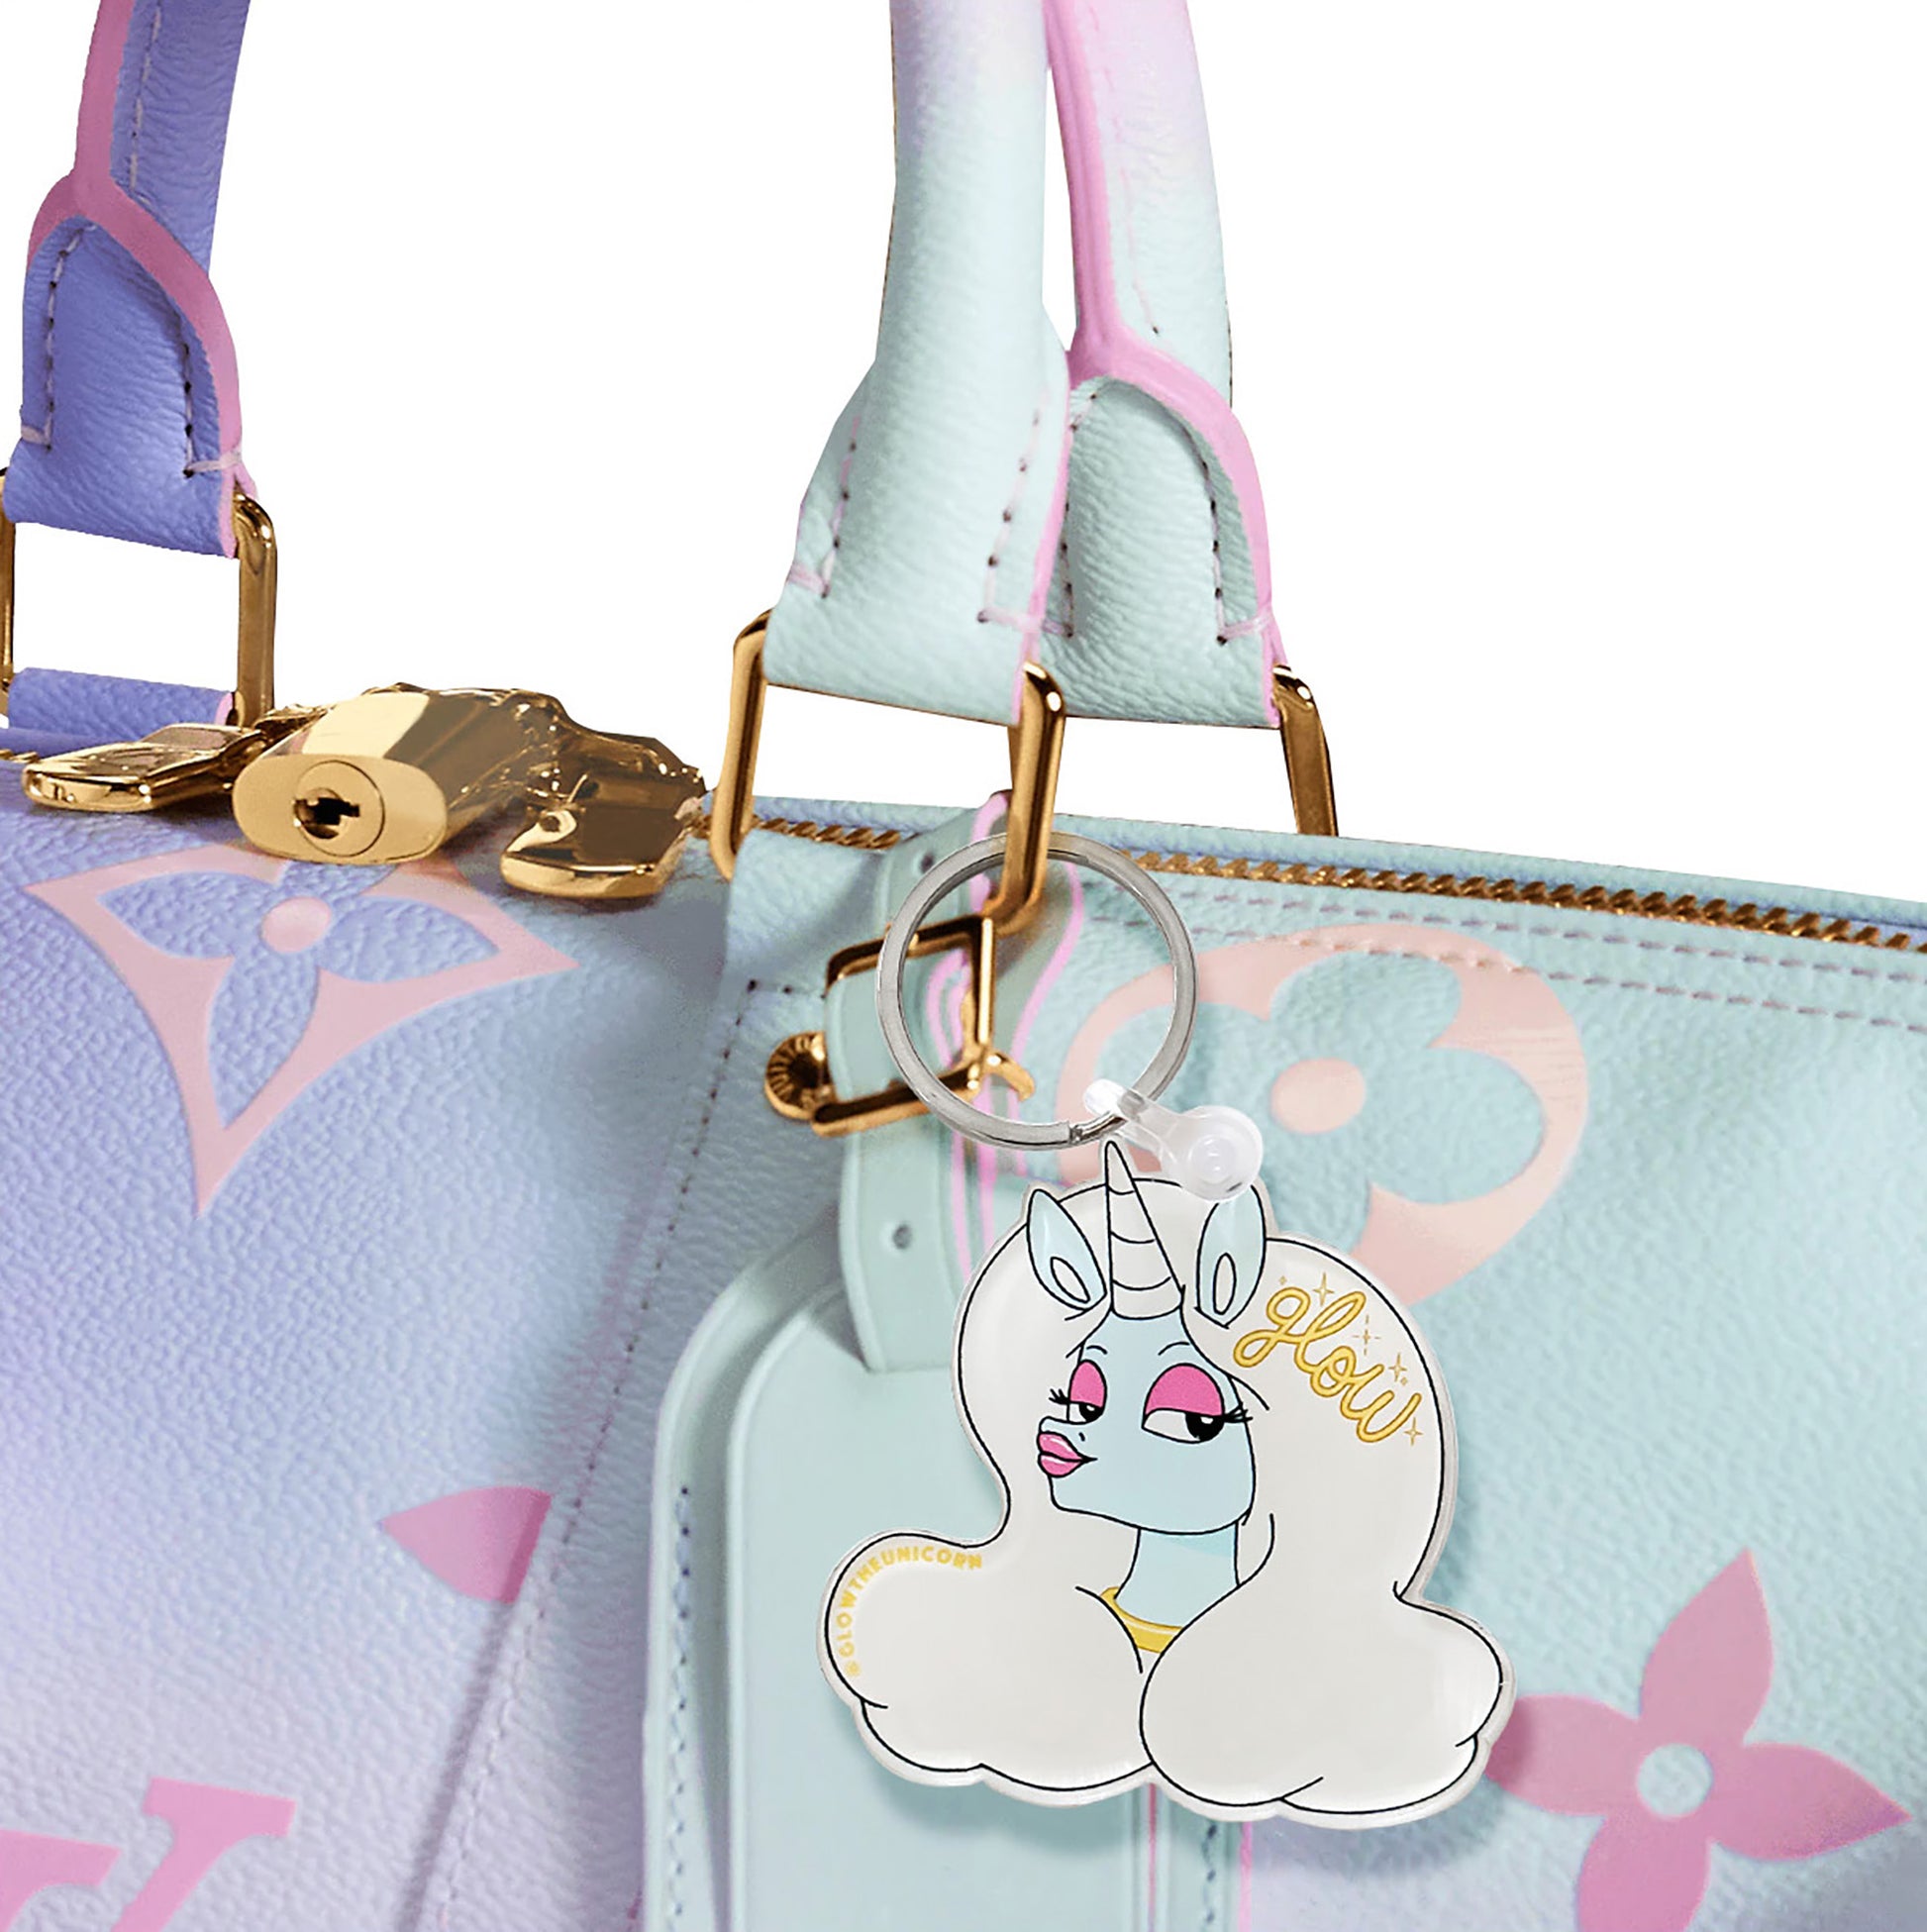 unicorn charm on pink and blue bag